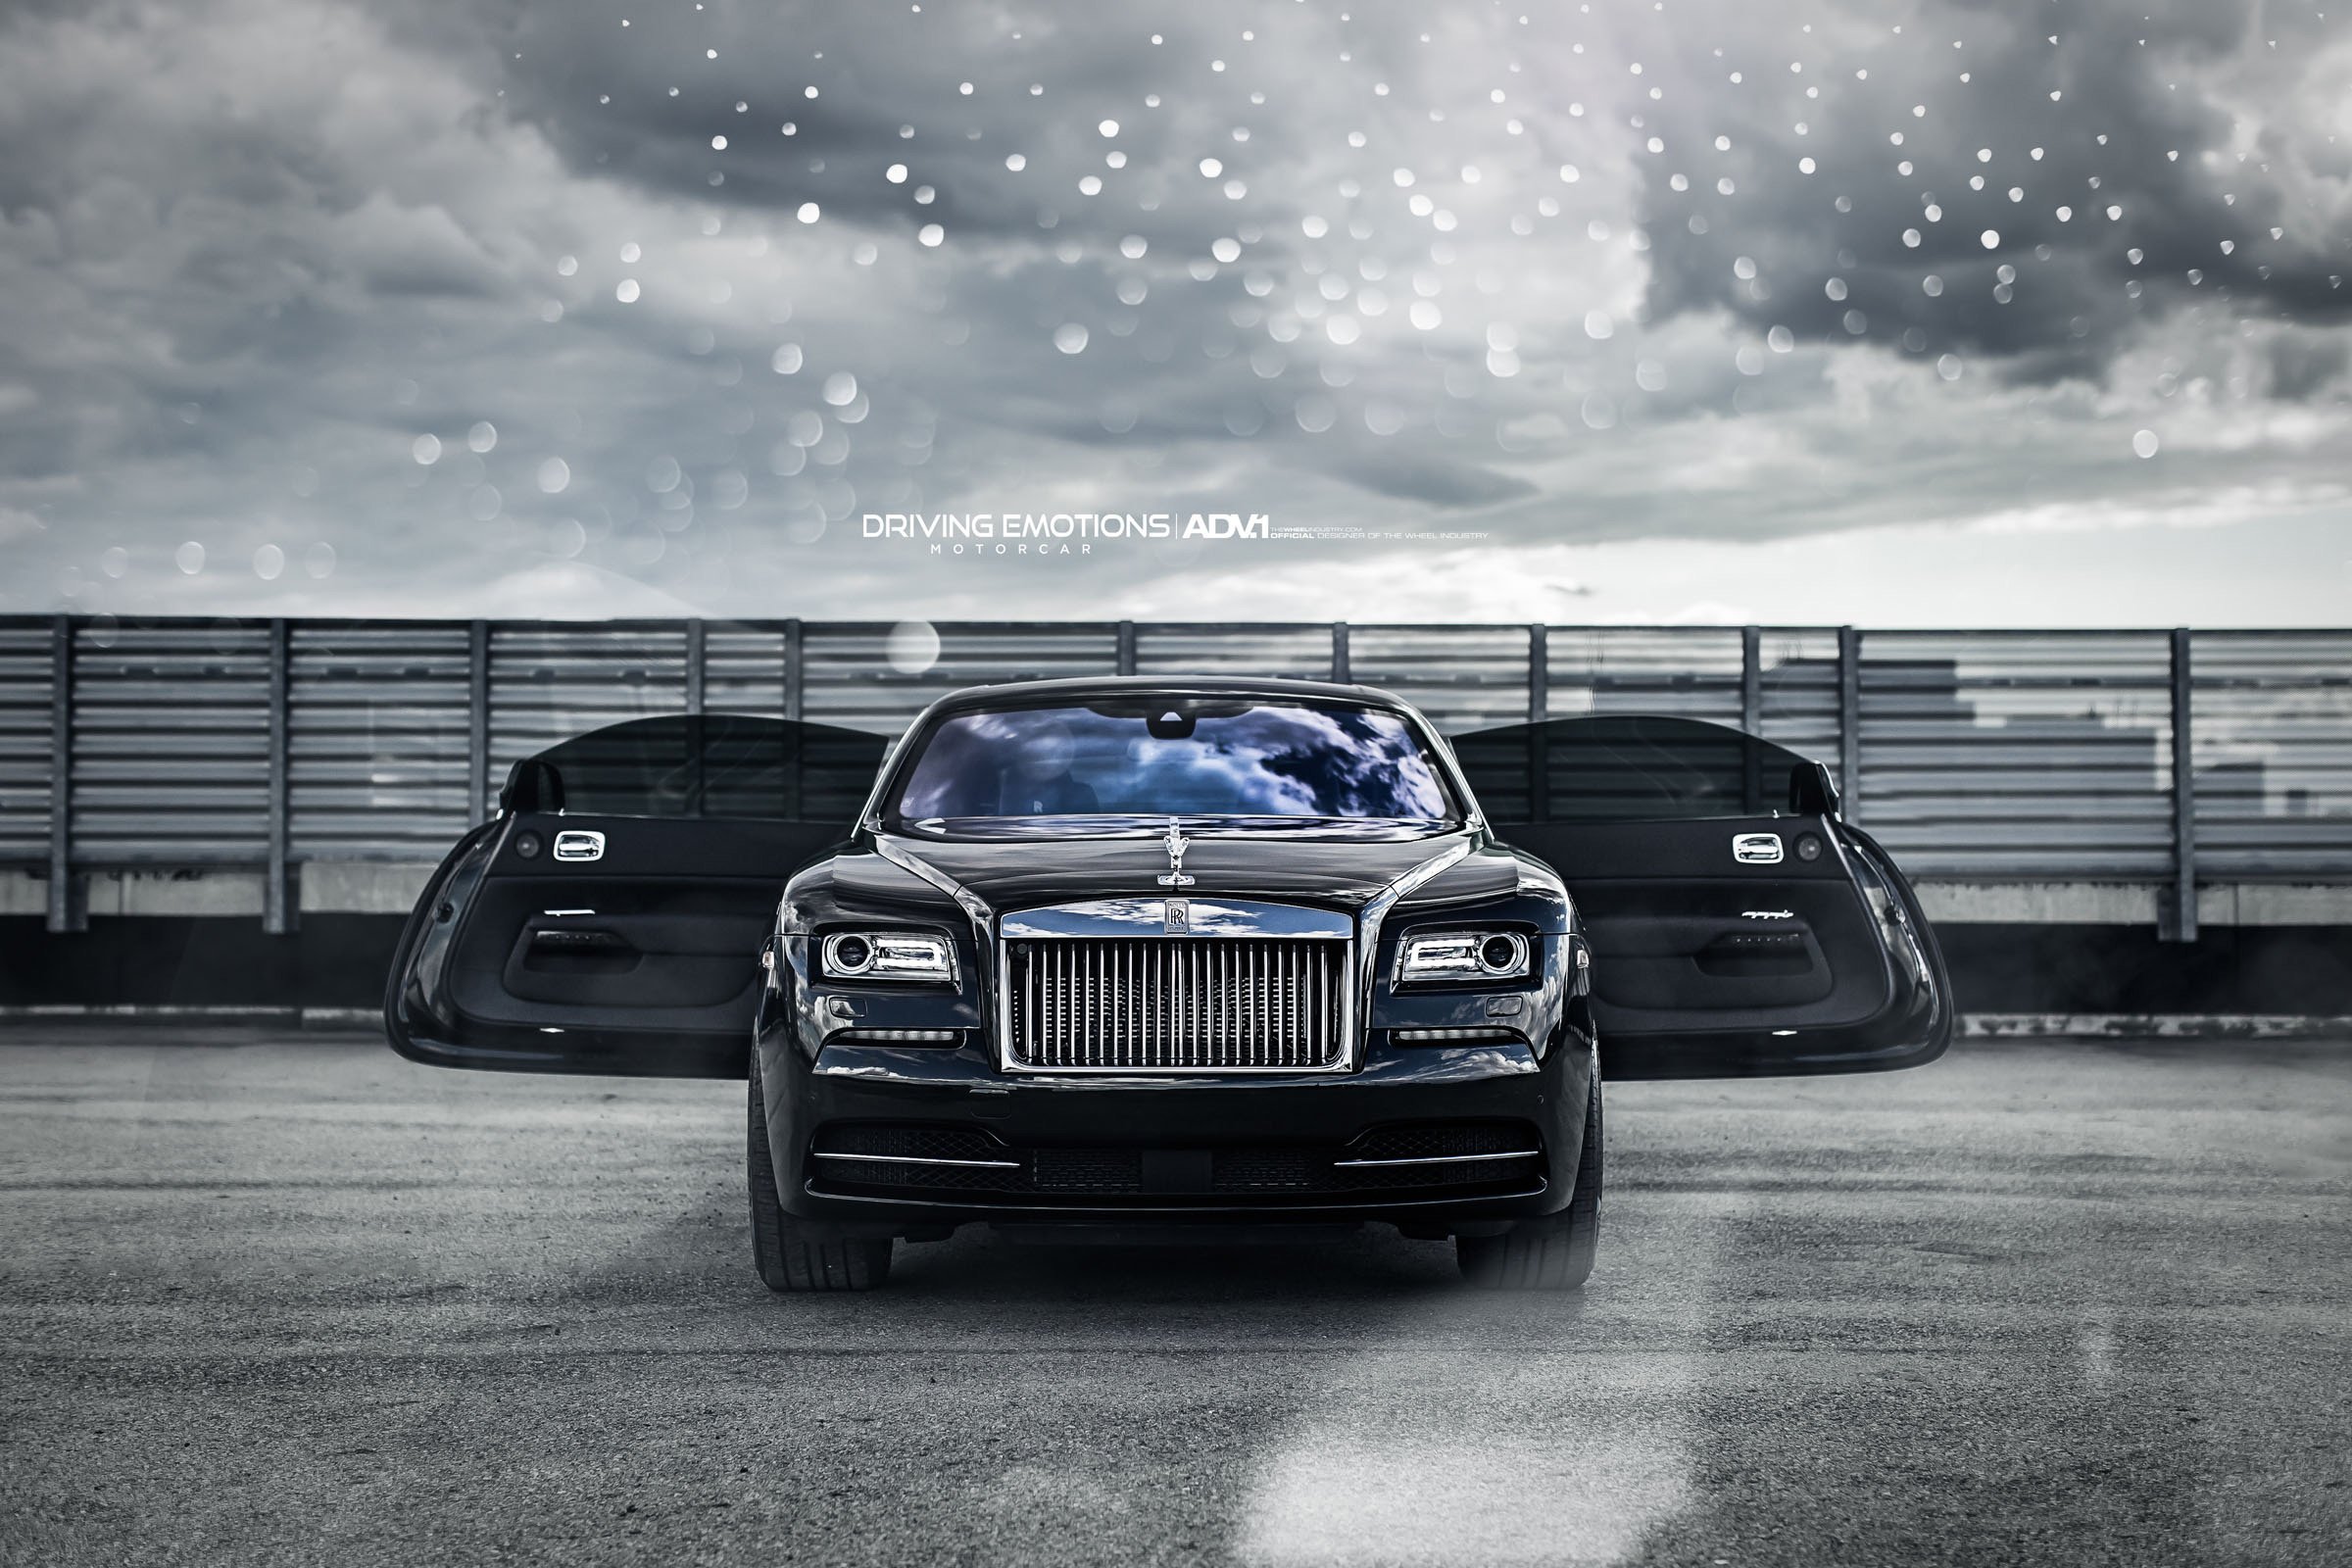 rolls, Royce, Wraith, Cars, Luxury, Adv1, Wheels, Black Wallpaper